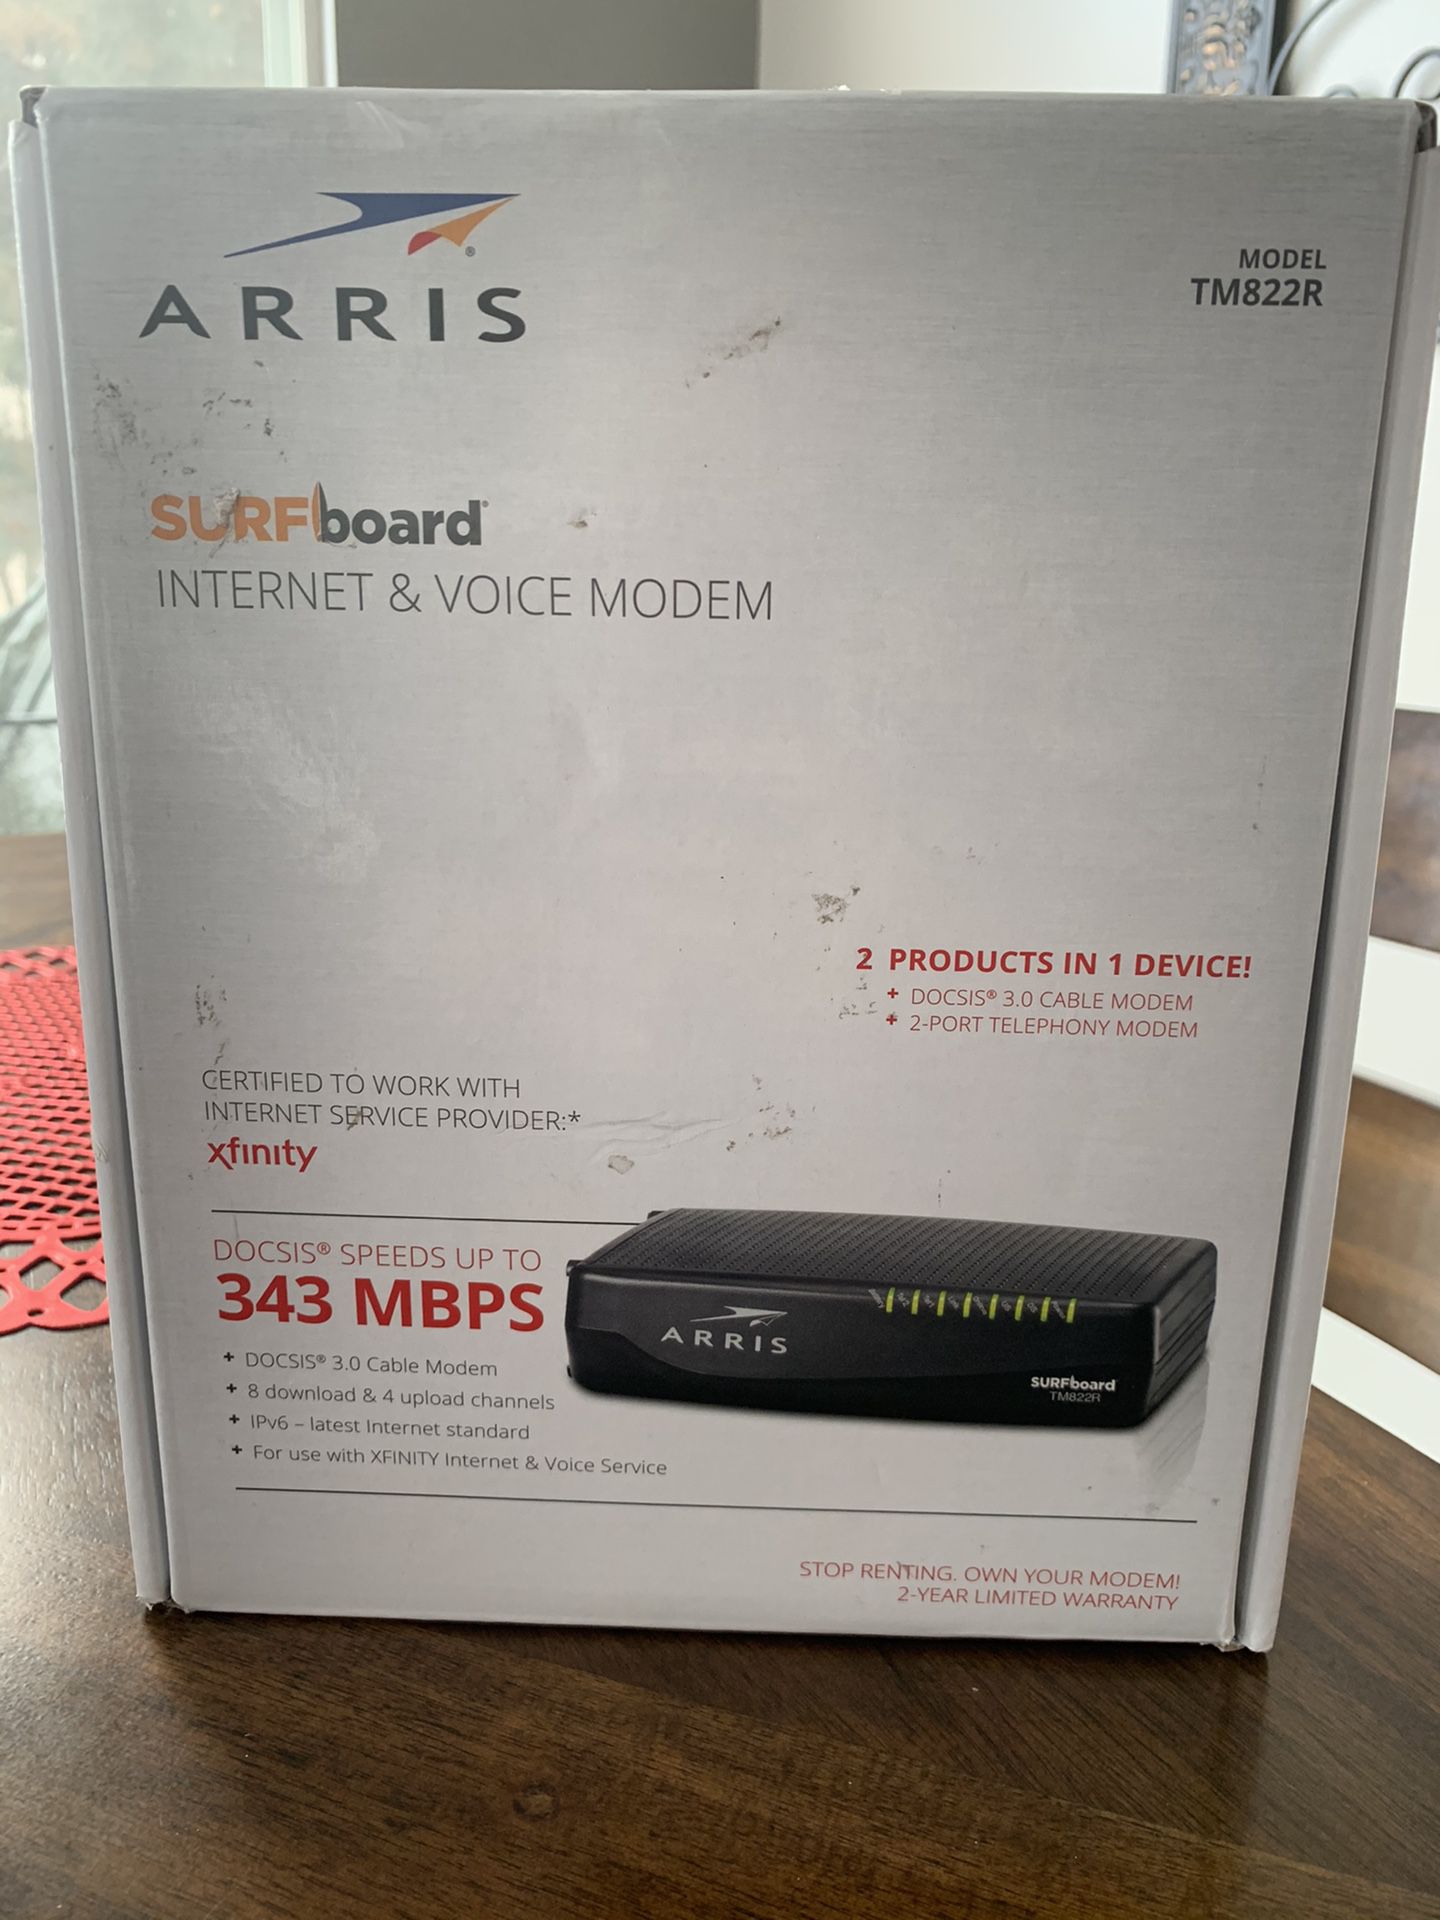 Arris surfboard internet and voice modem